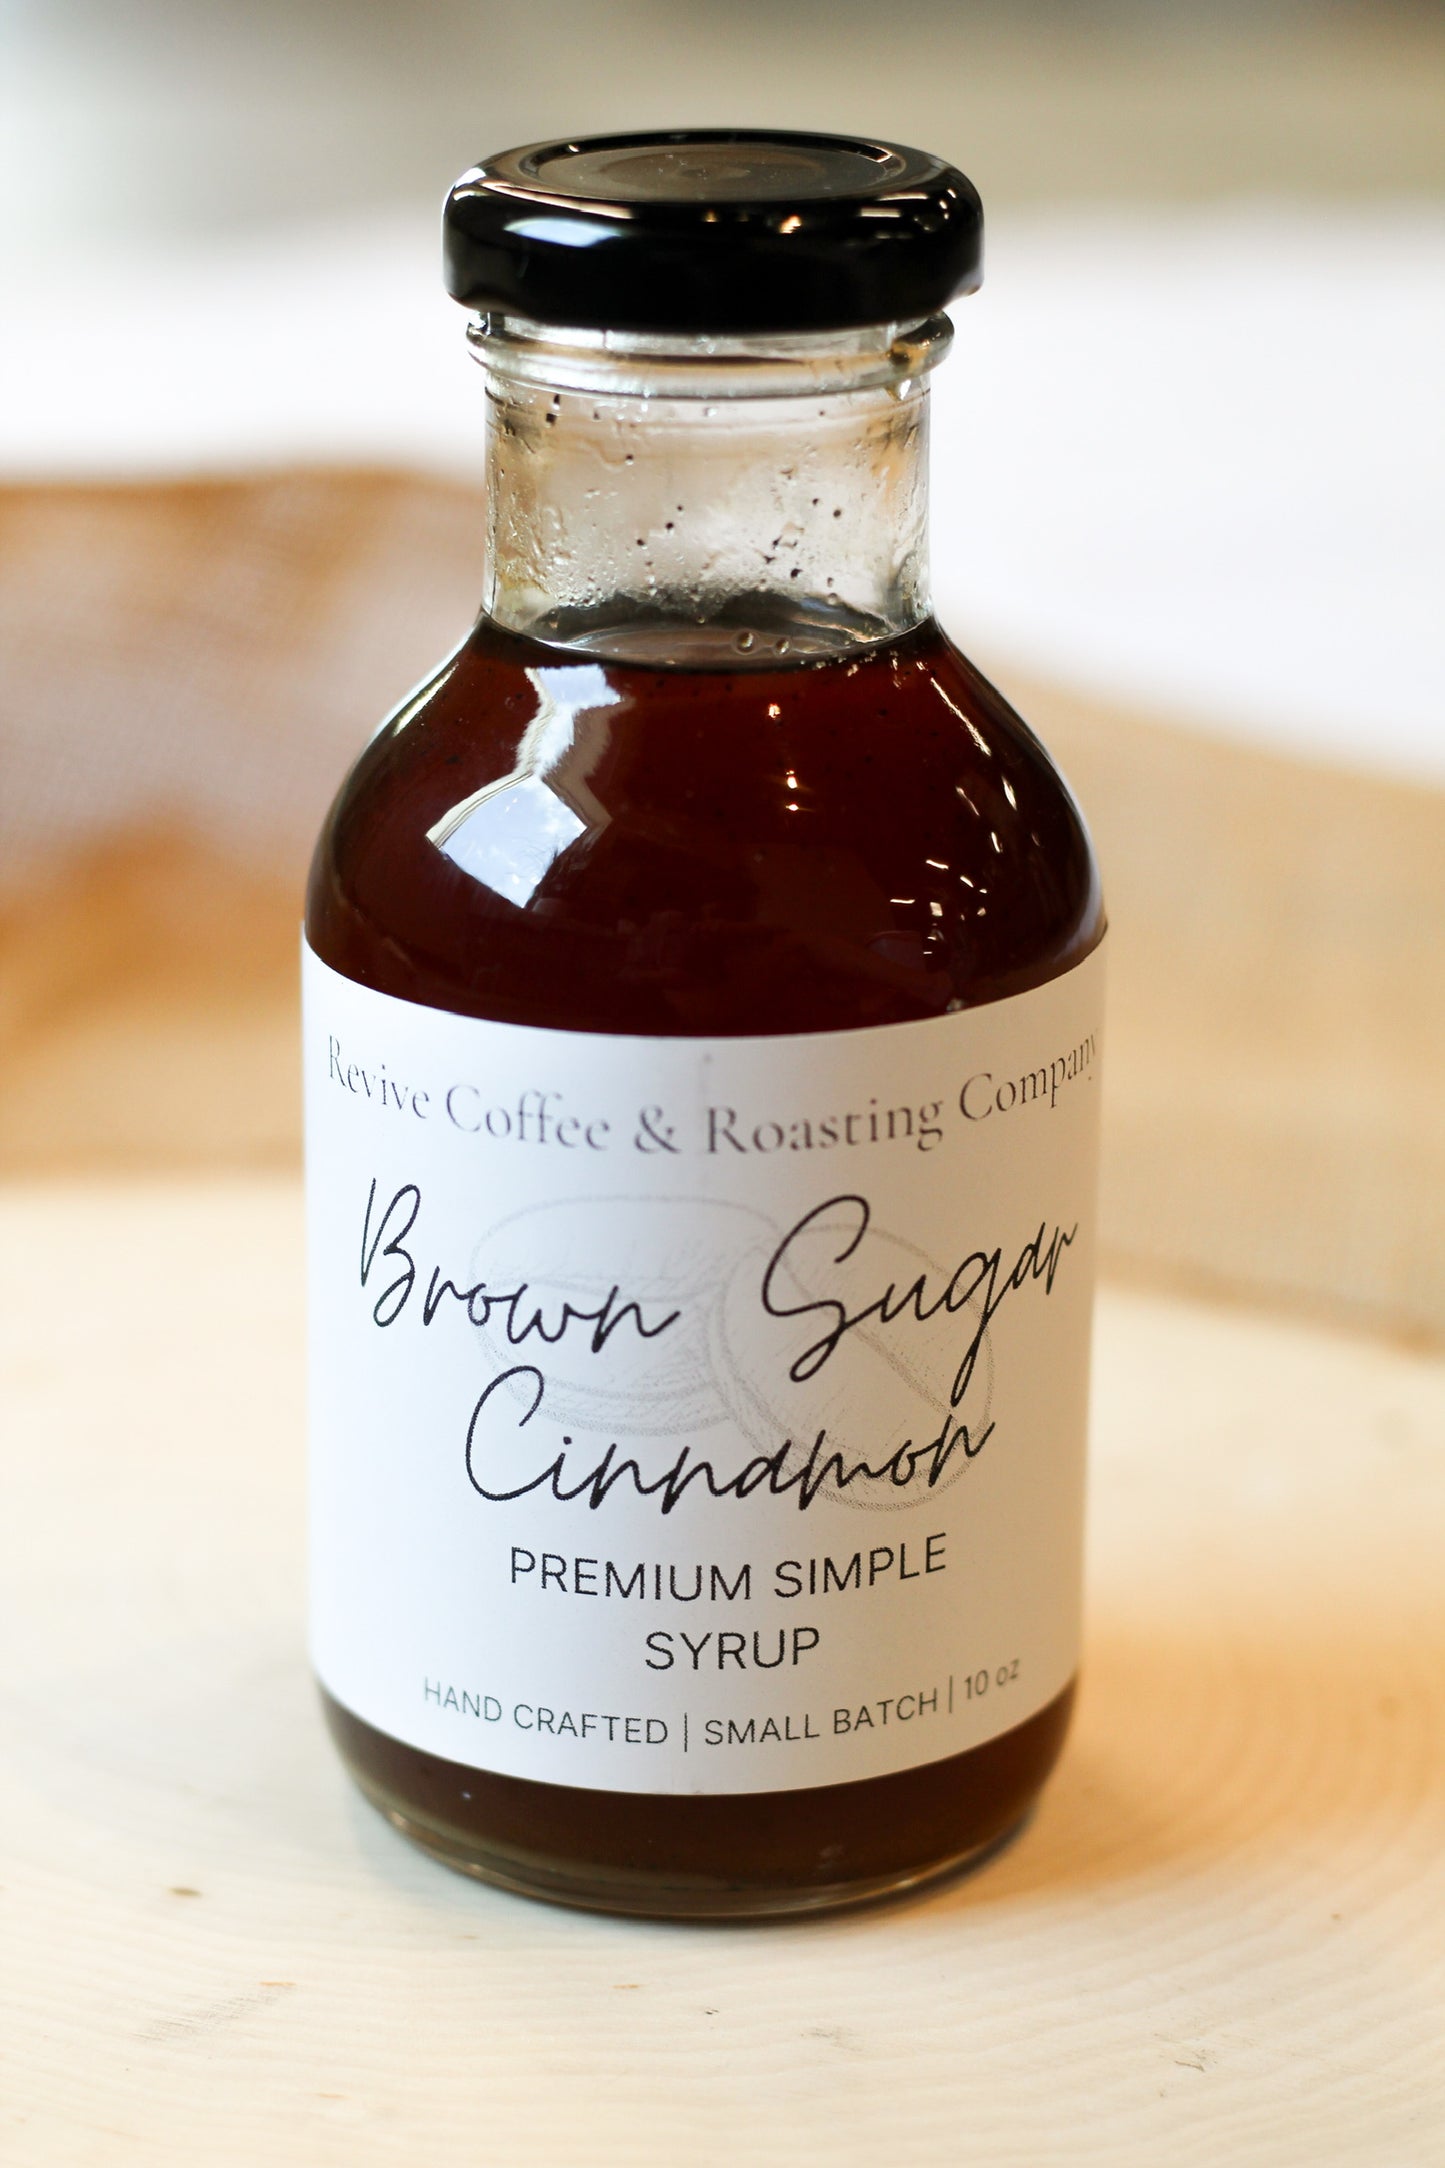 Brown Sugar Cinnamon Premium Simple Syrup